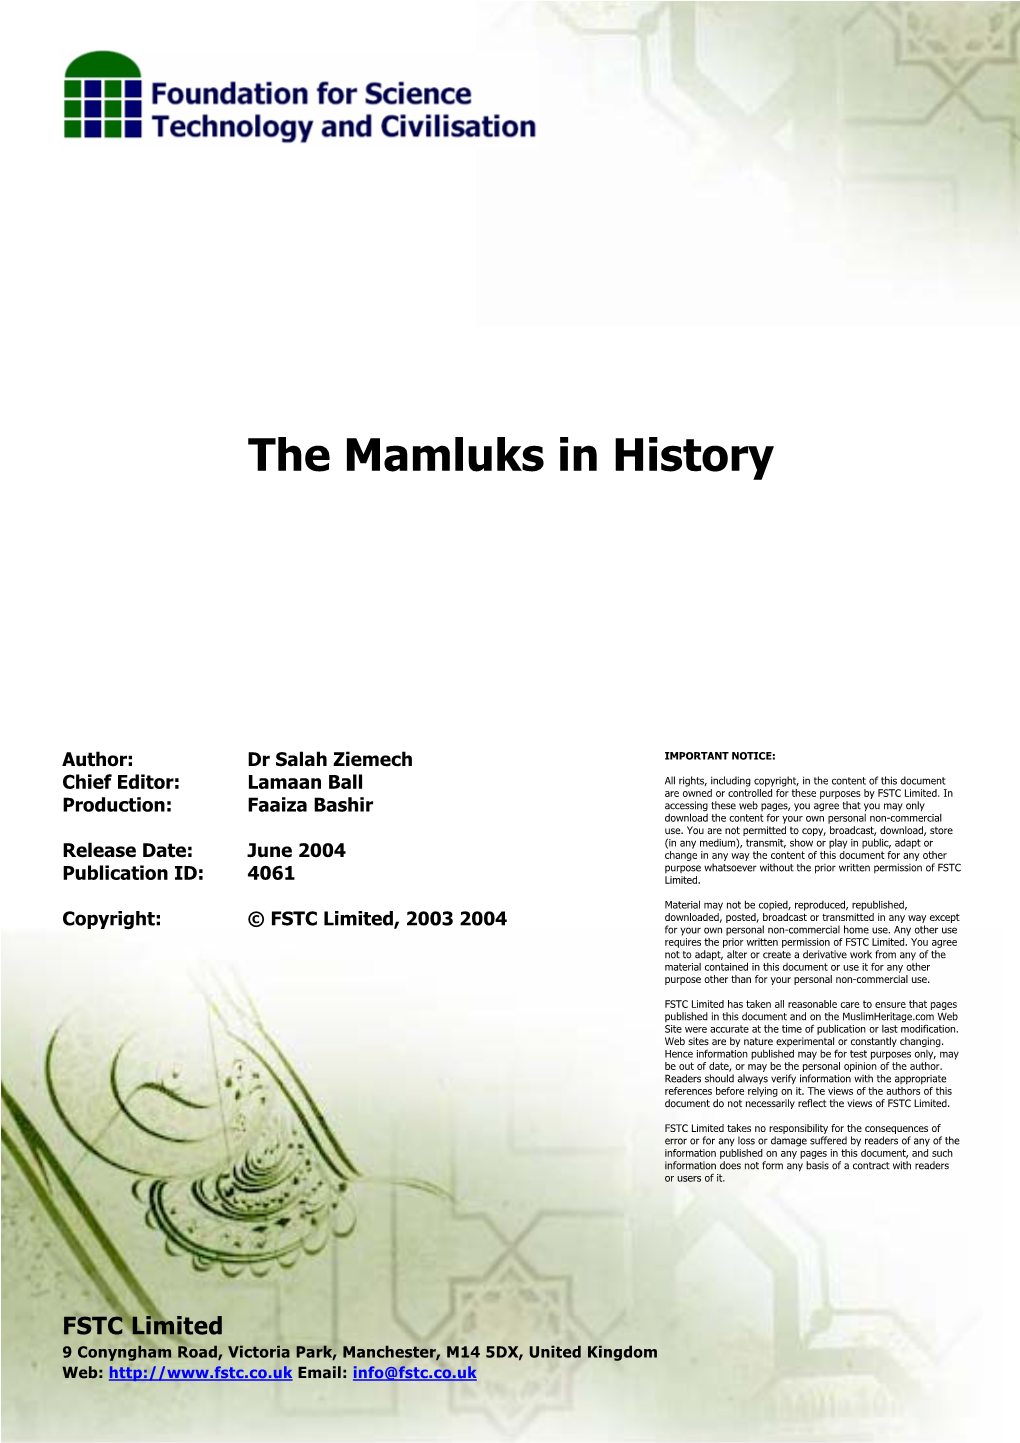 The Mamluks in History